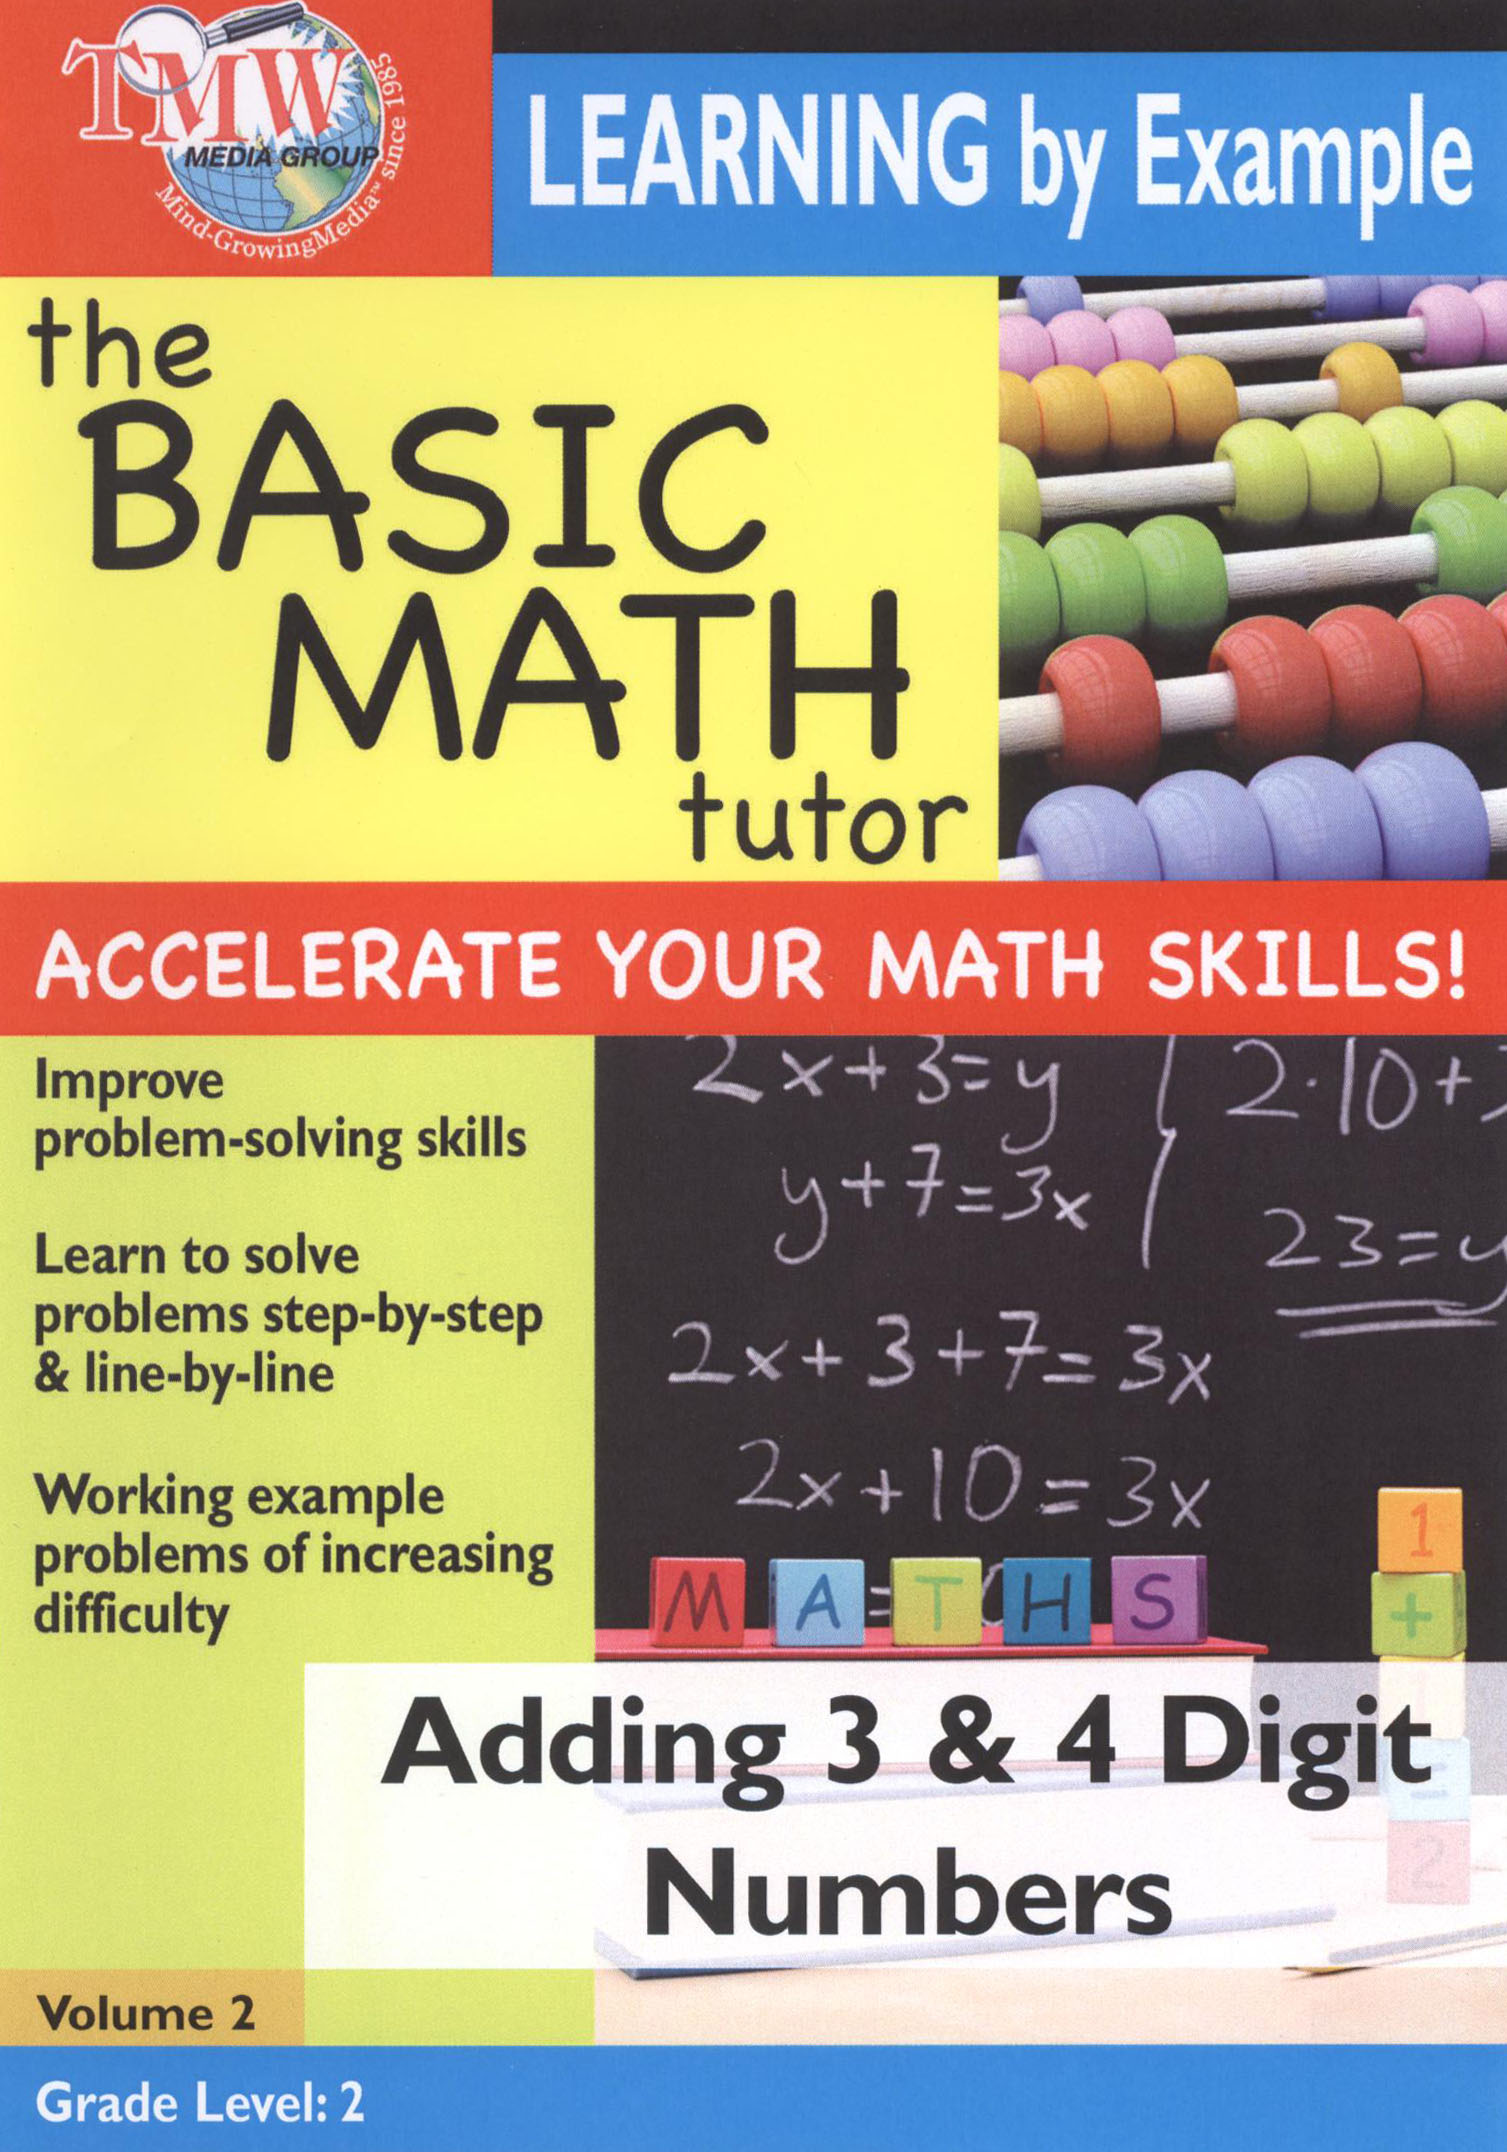 

The Basic Math Tutor: Adding 3 & 4 Digit Numbers